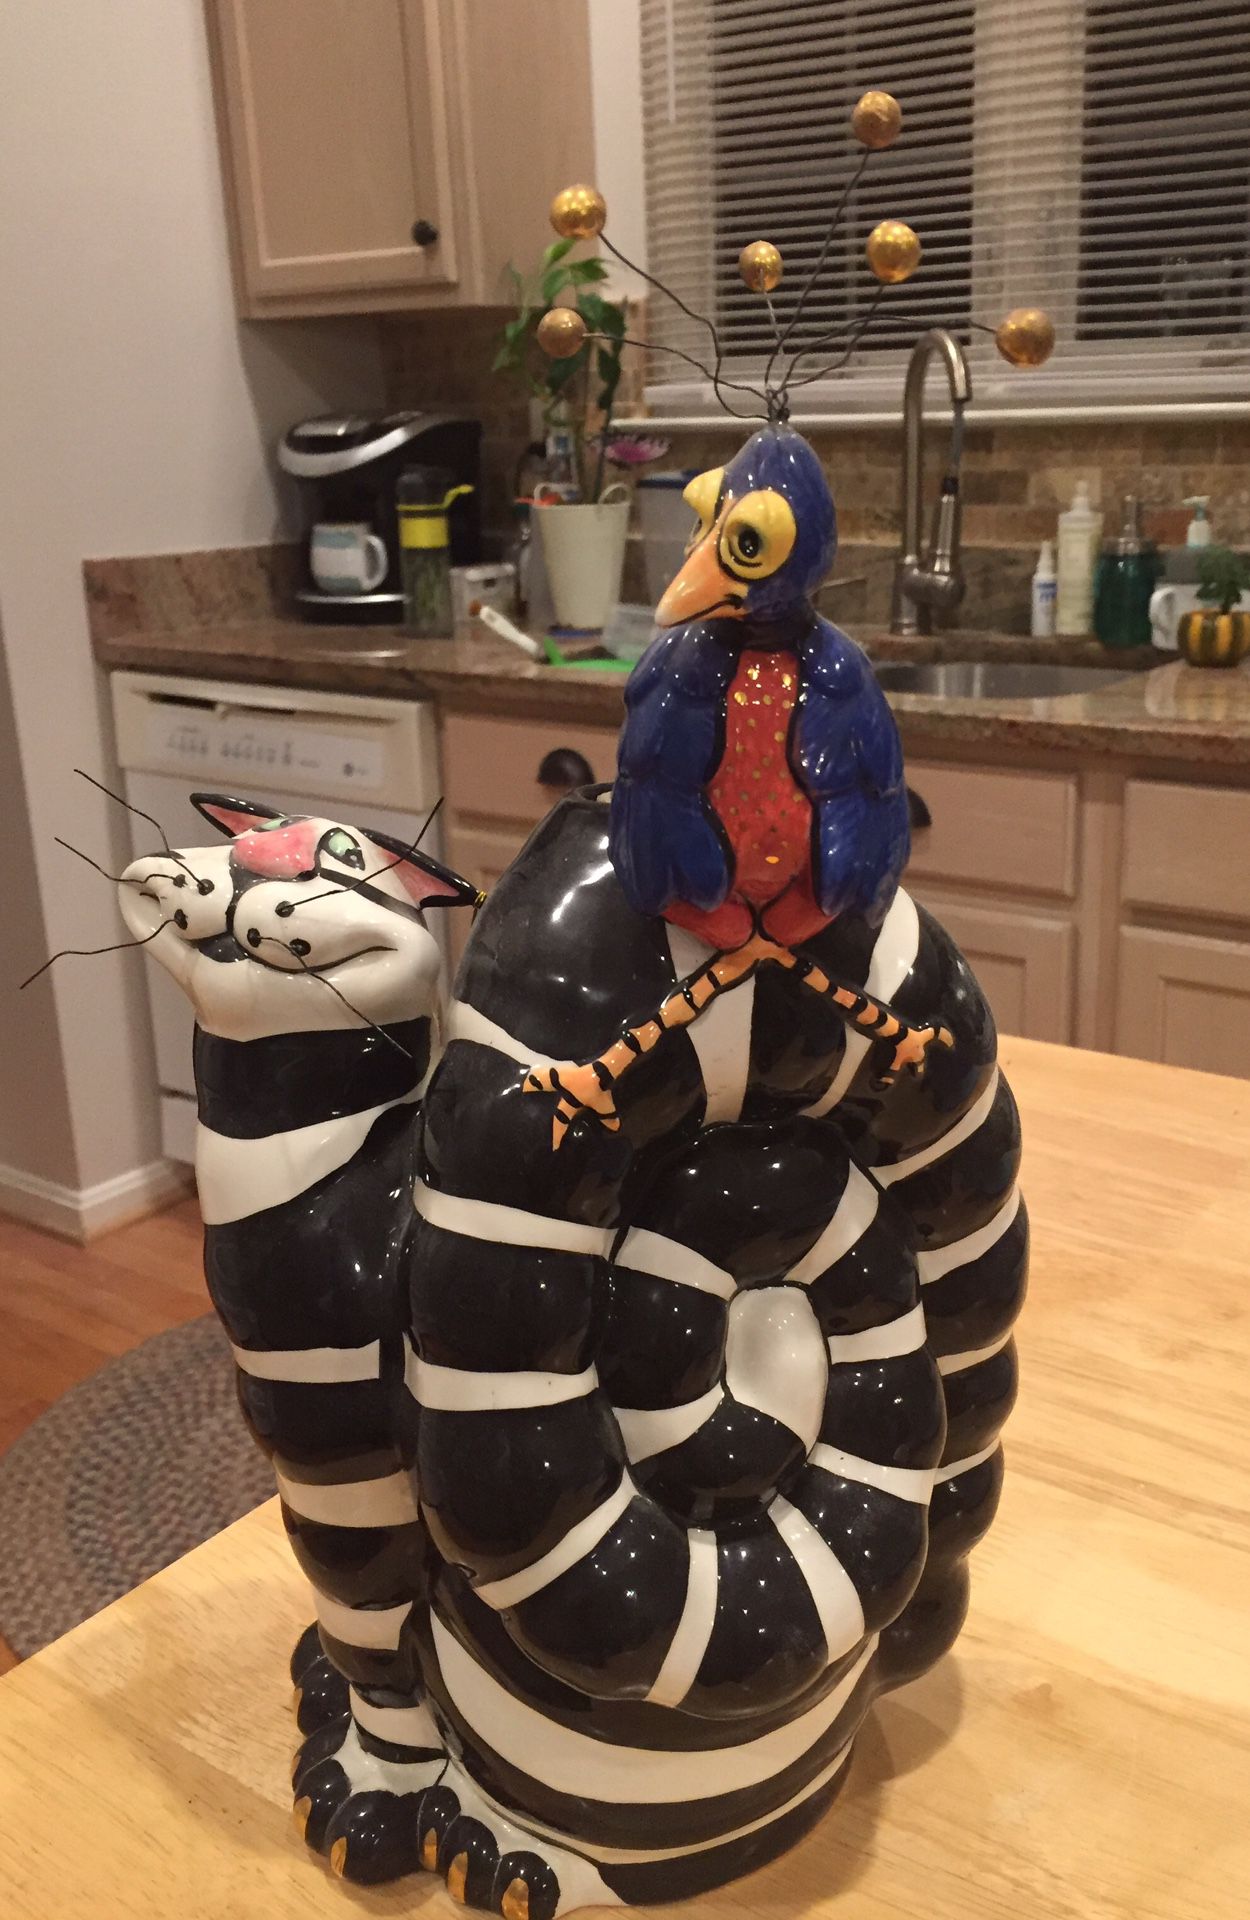 Whimsical cat and bird sculpture with tea light candle at top behind bird.